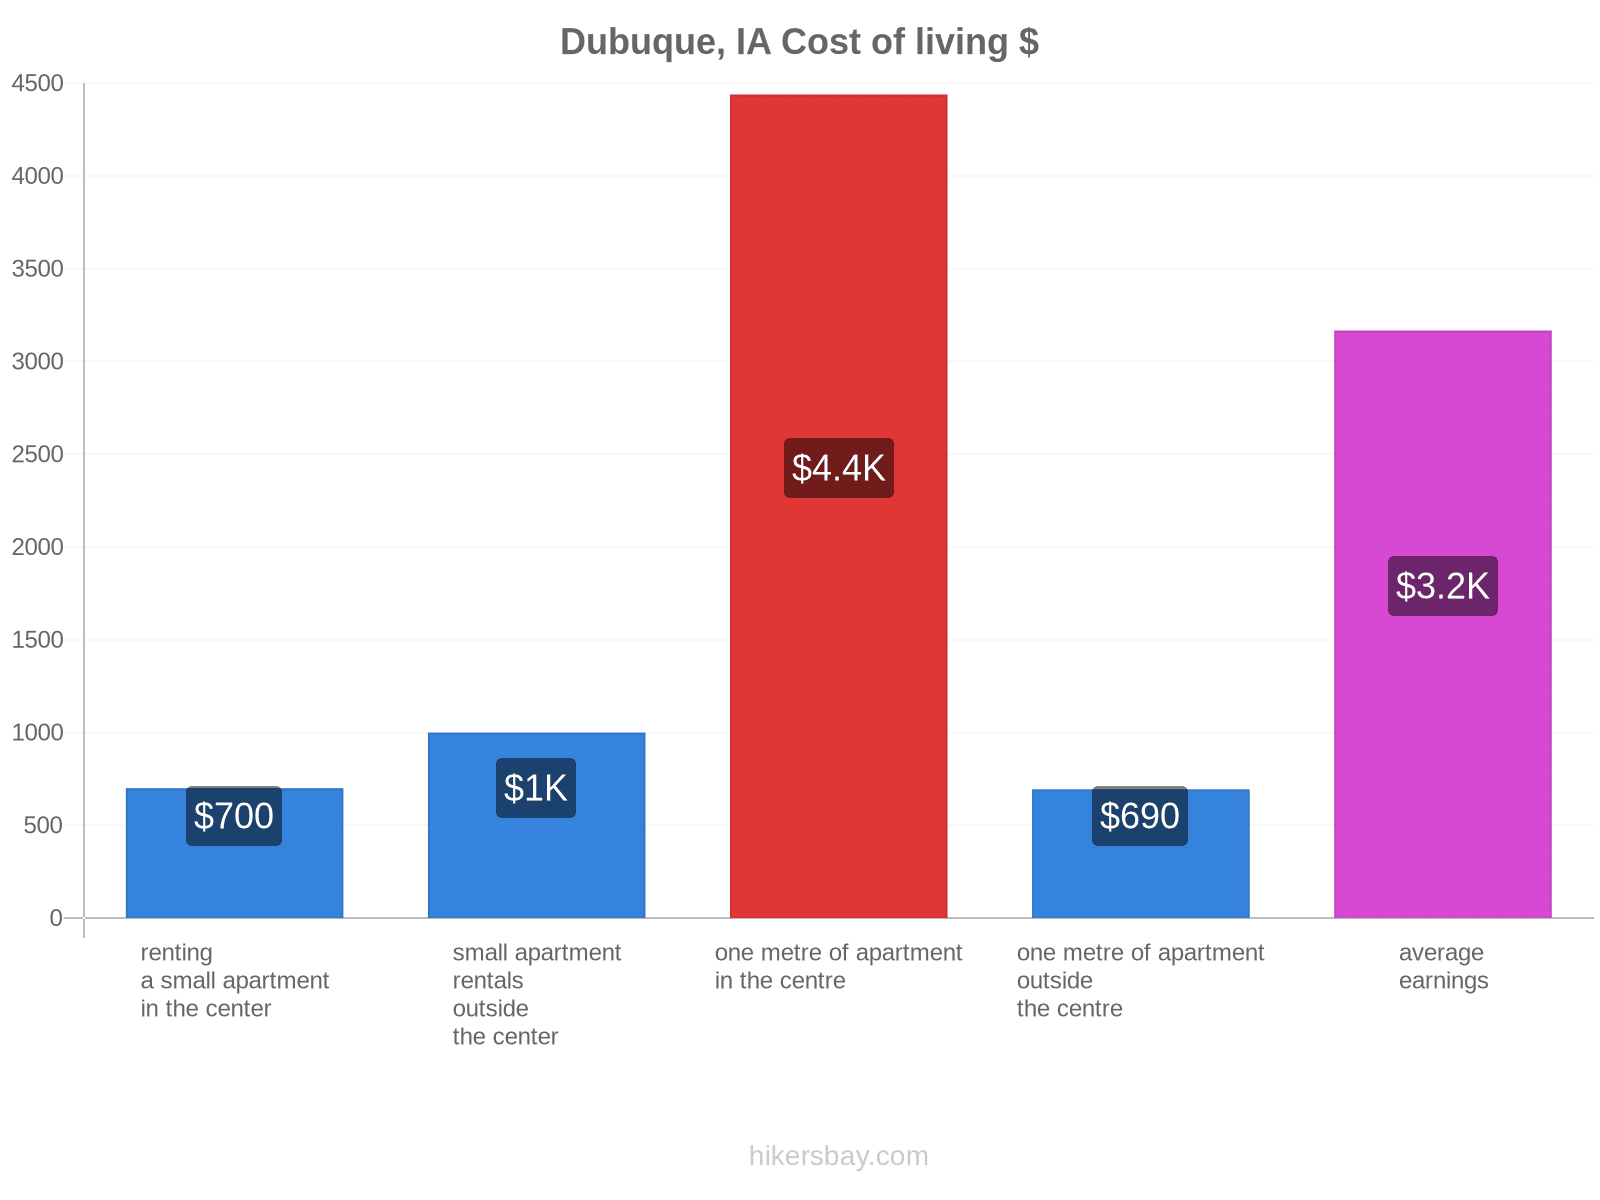 Dubuque, IA cost of living hikersbay.com